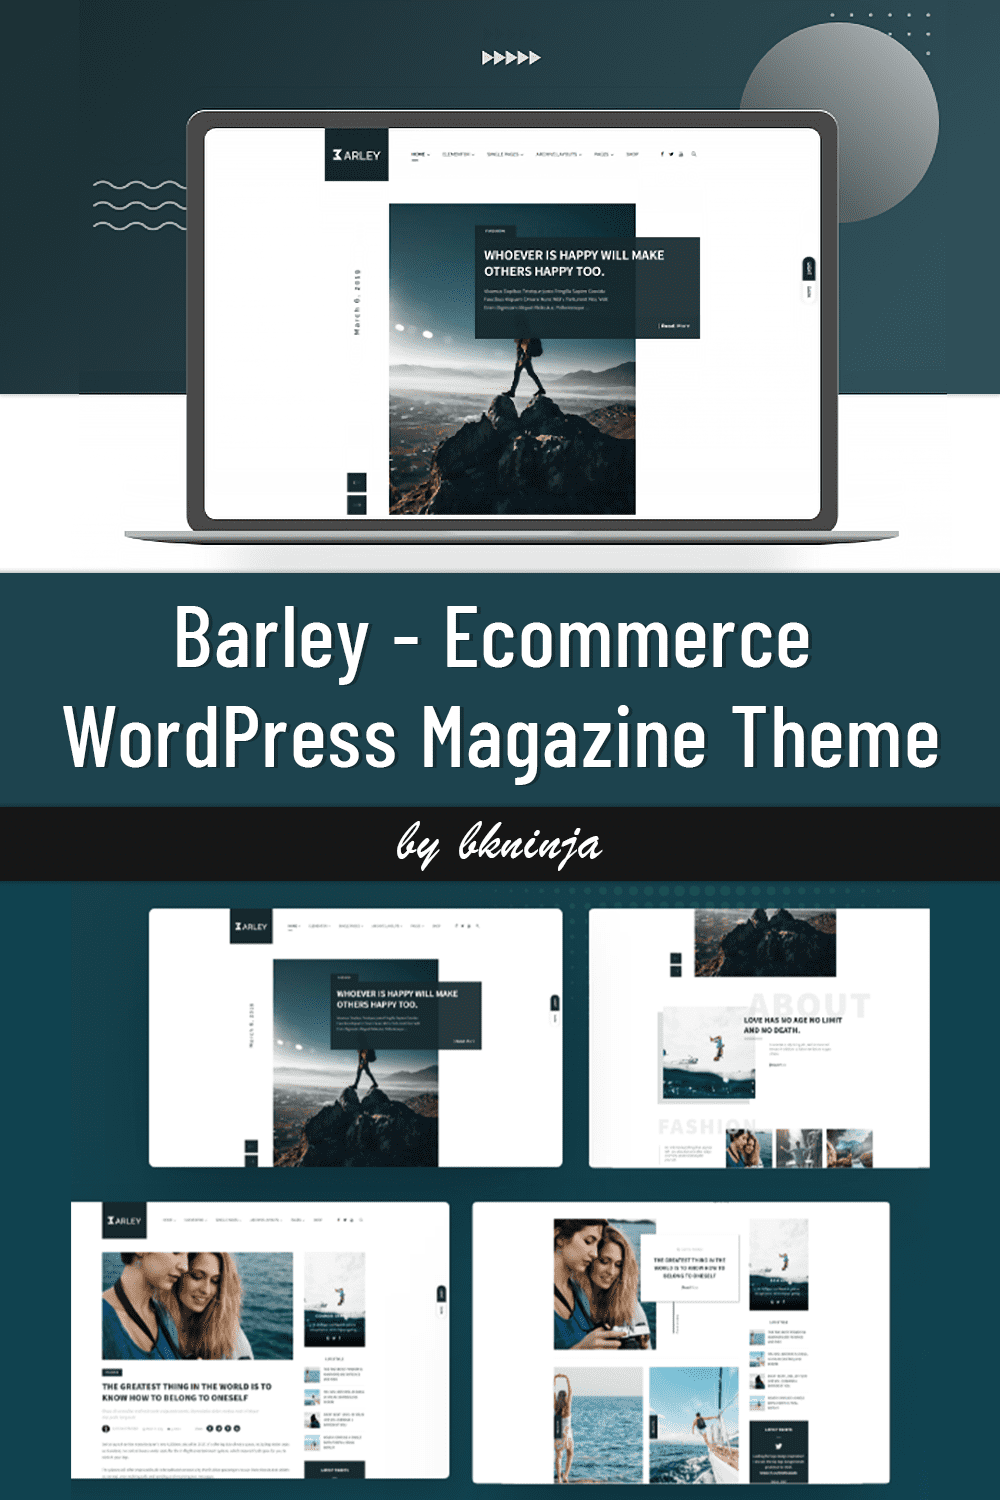 Barley ecommerce wordpress magazine theme, picture for pinterest 1000x1500.